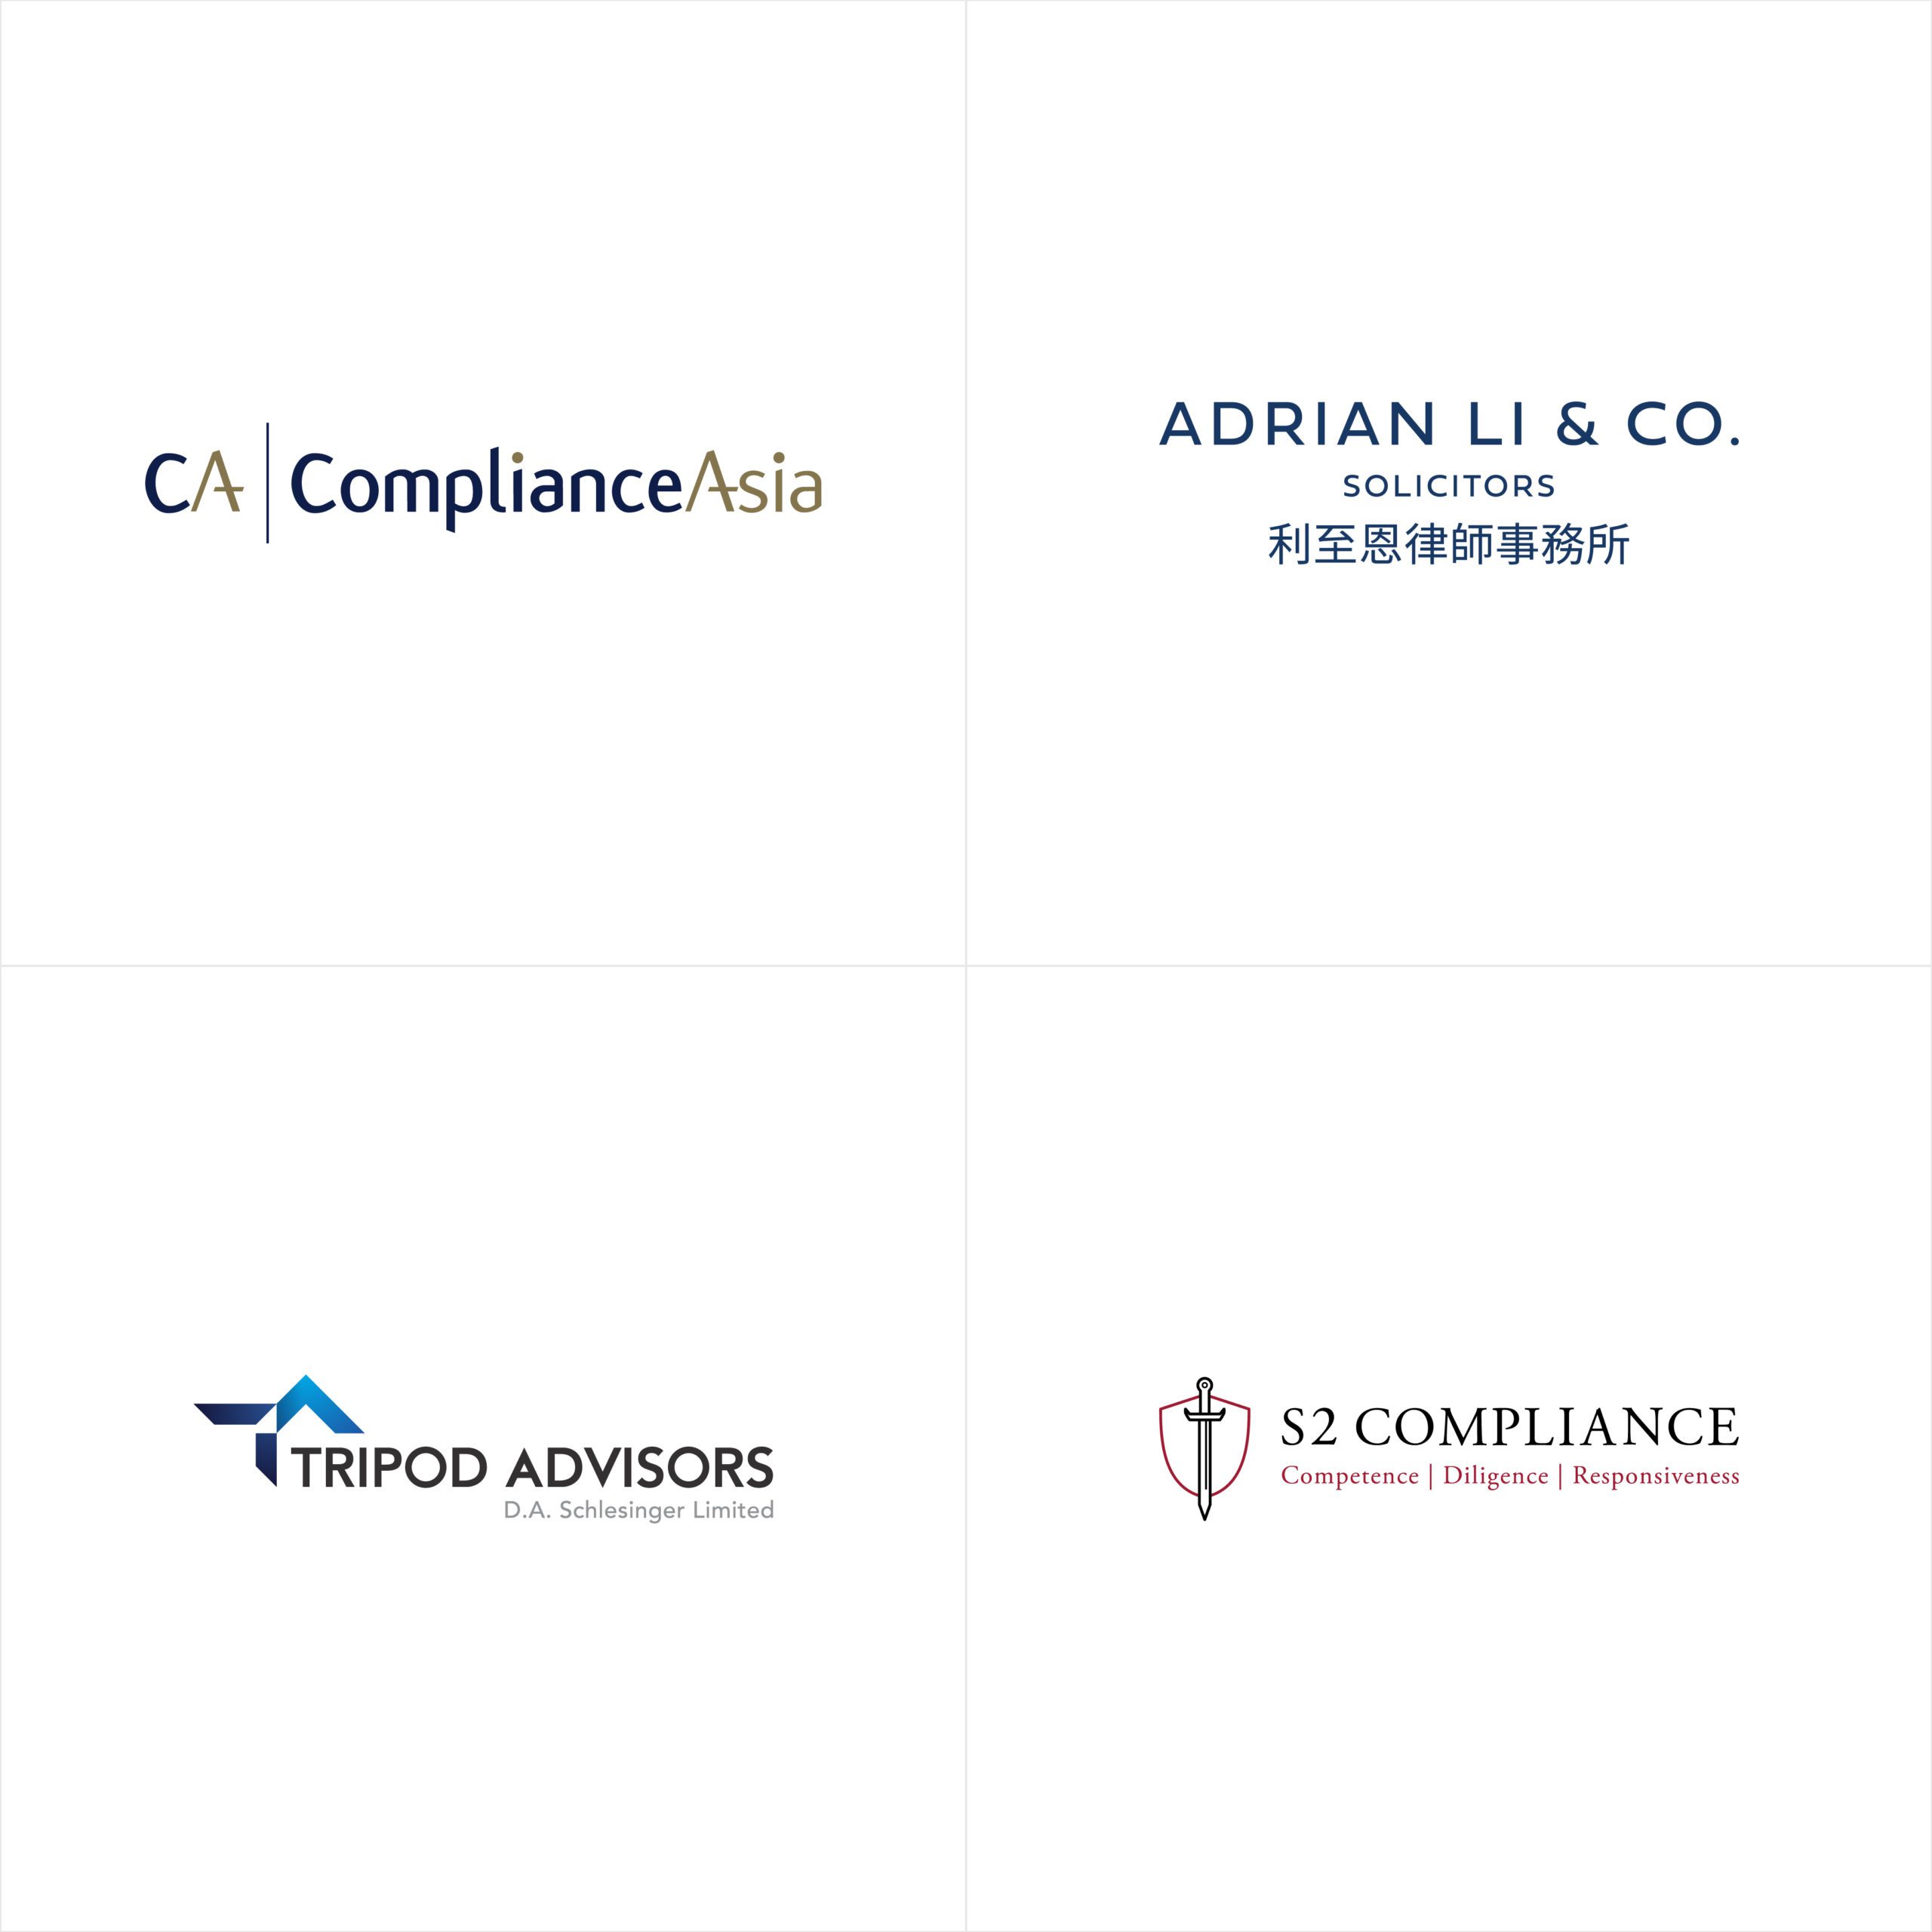 CA Adrian Li & Co. Slicitors Tripod Advisors S2 Compliance logo